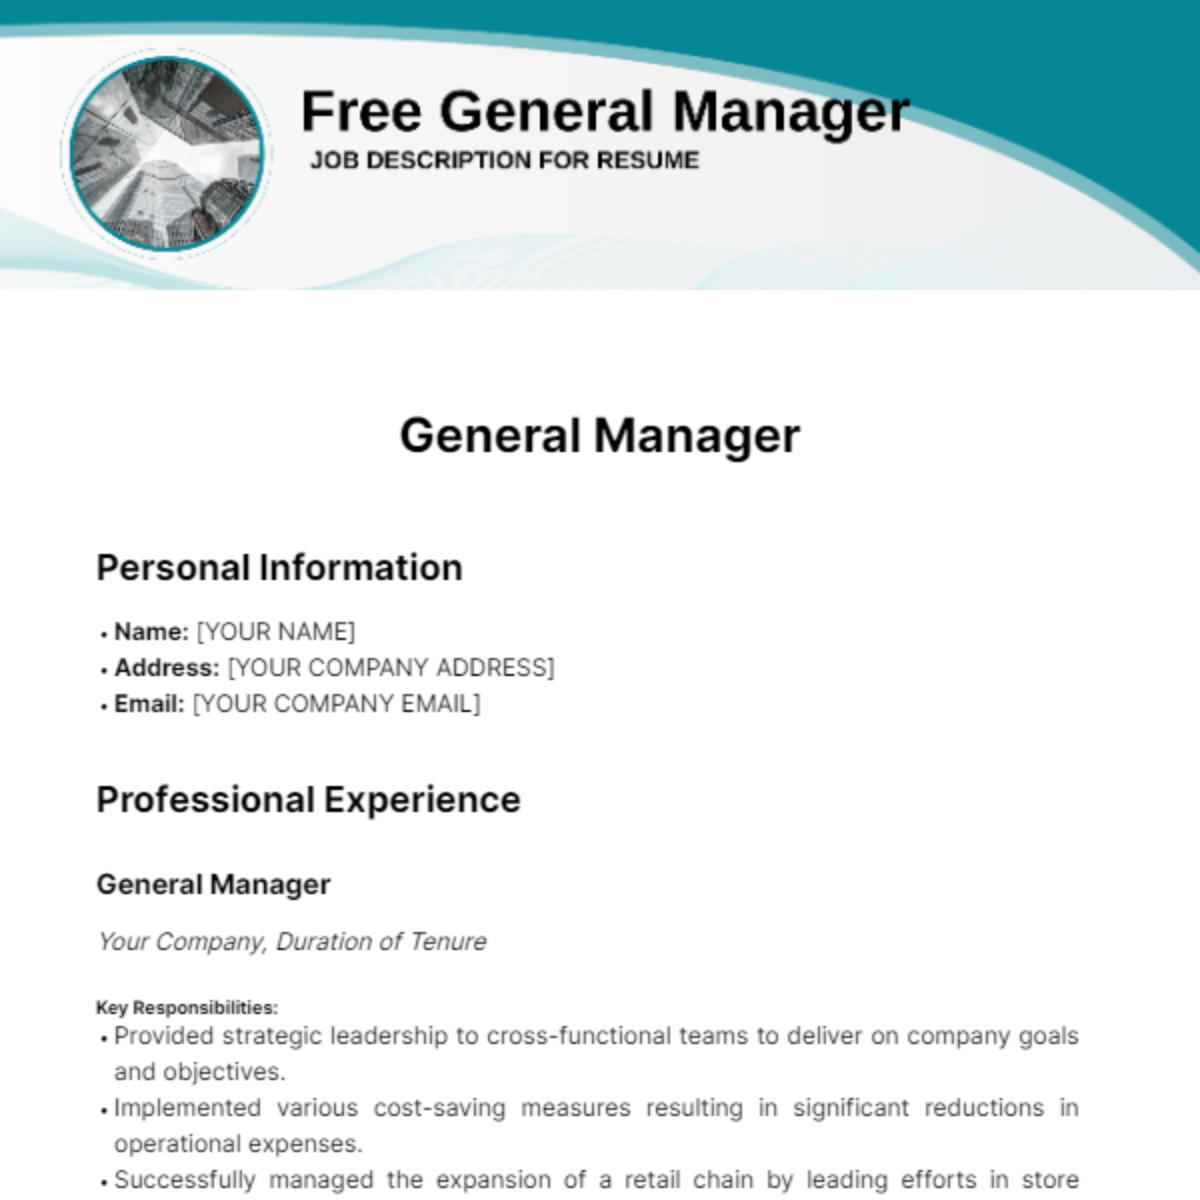 Free General Manager Job Description for Resume Template